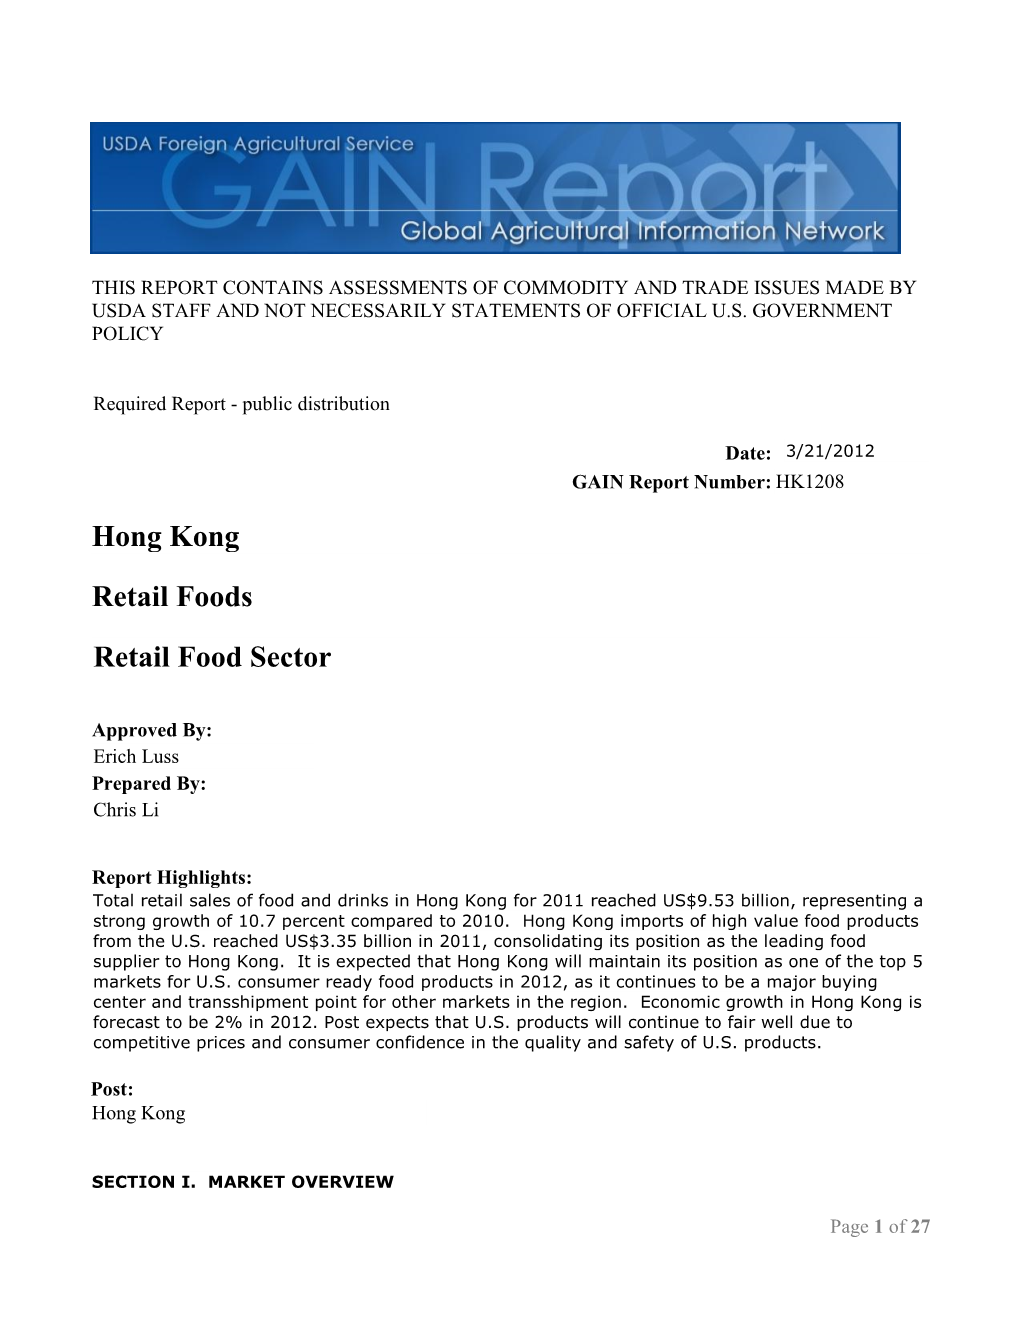 Retail Food Sector Retail Foods Hong Kong